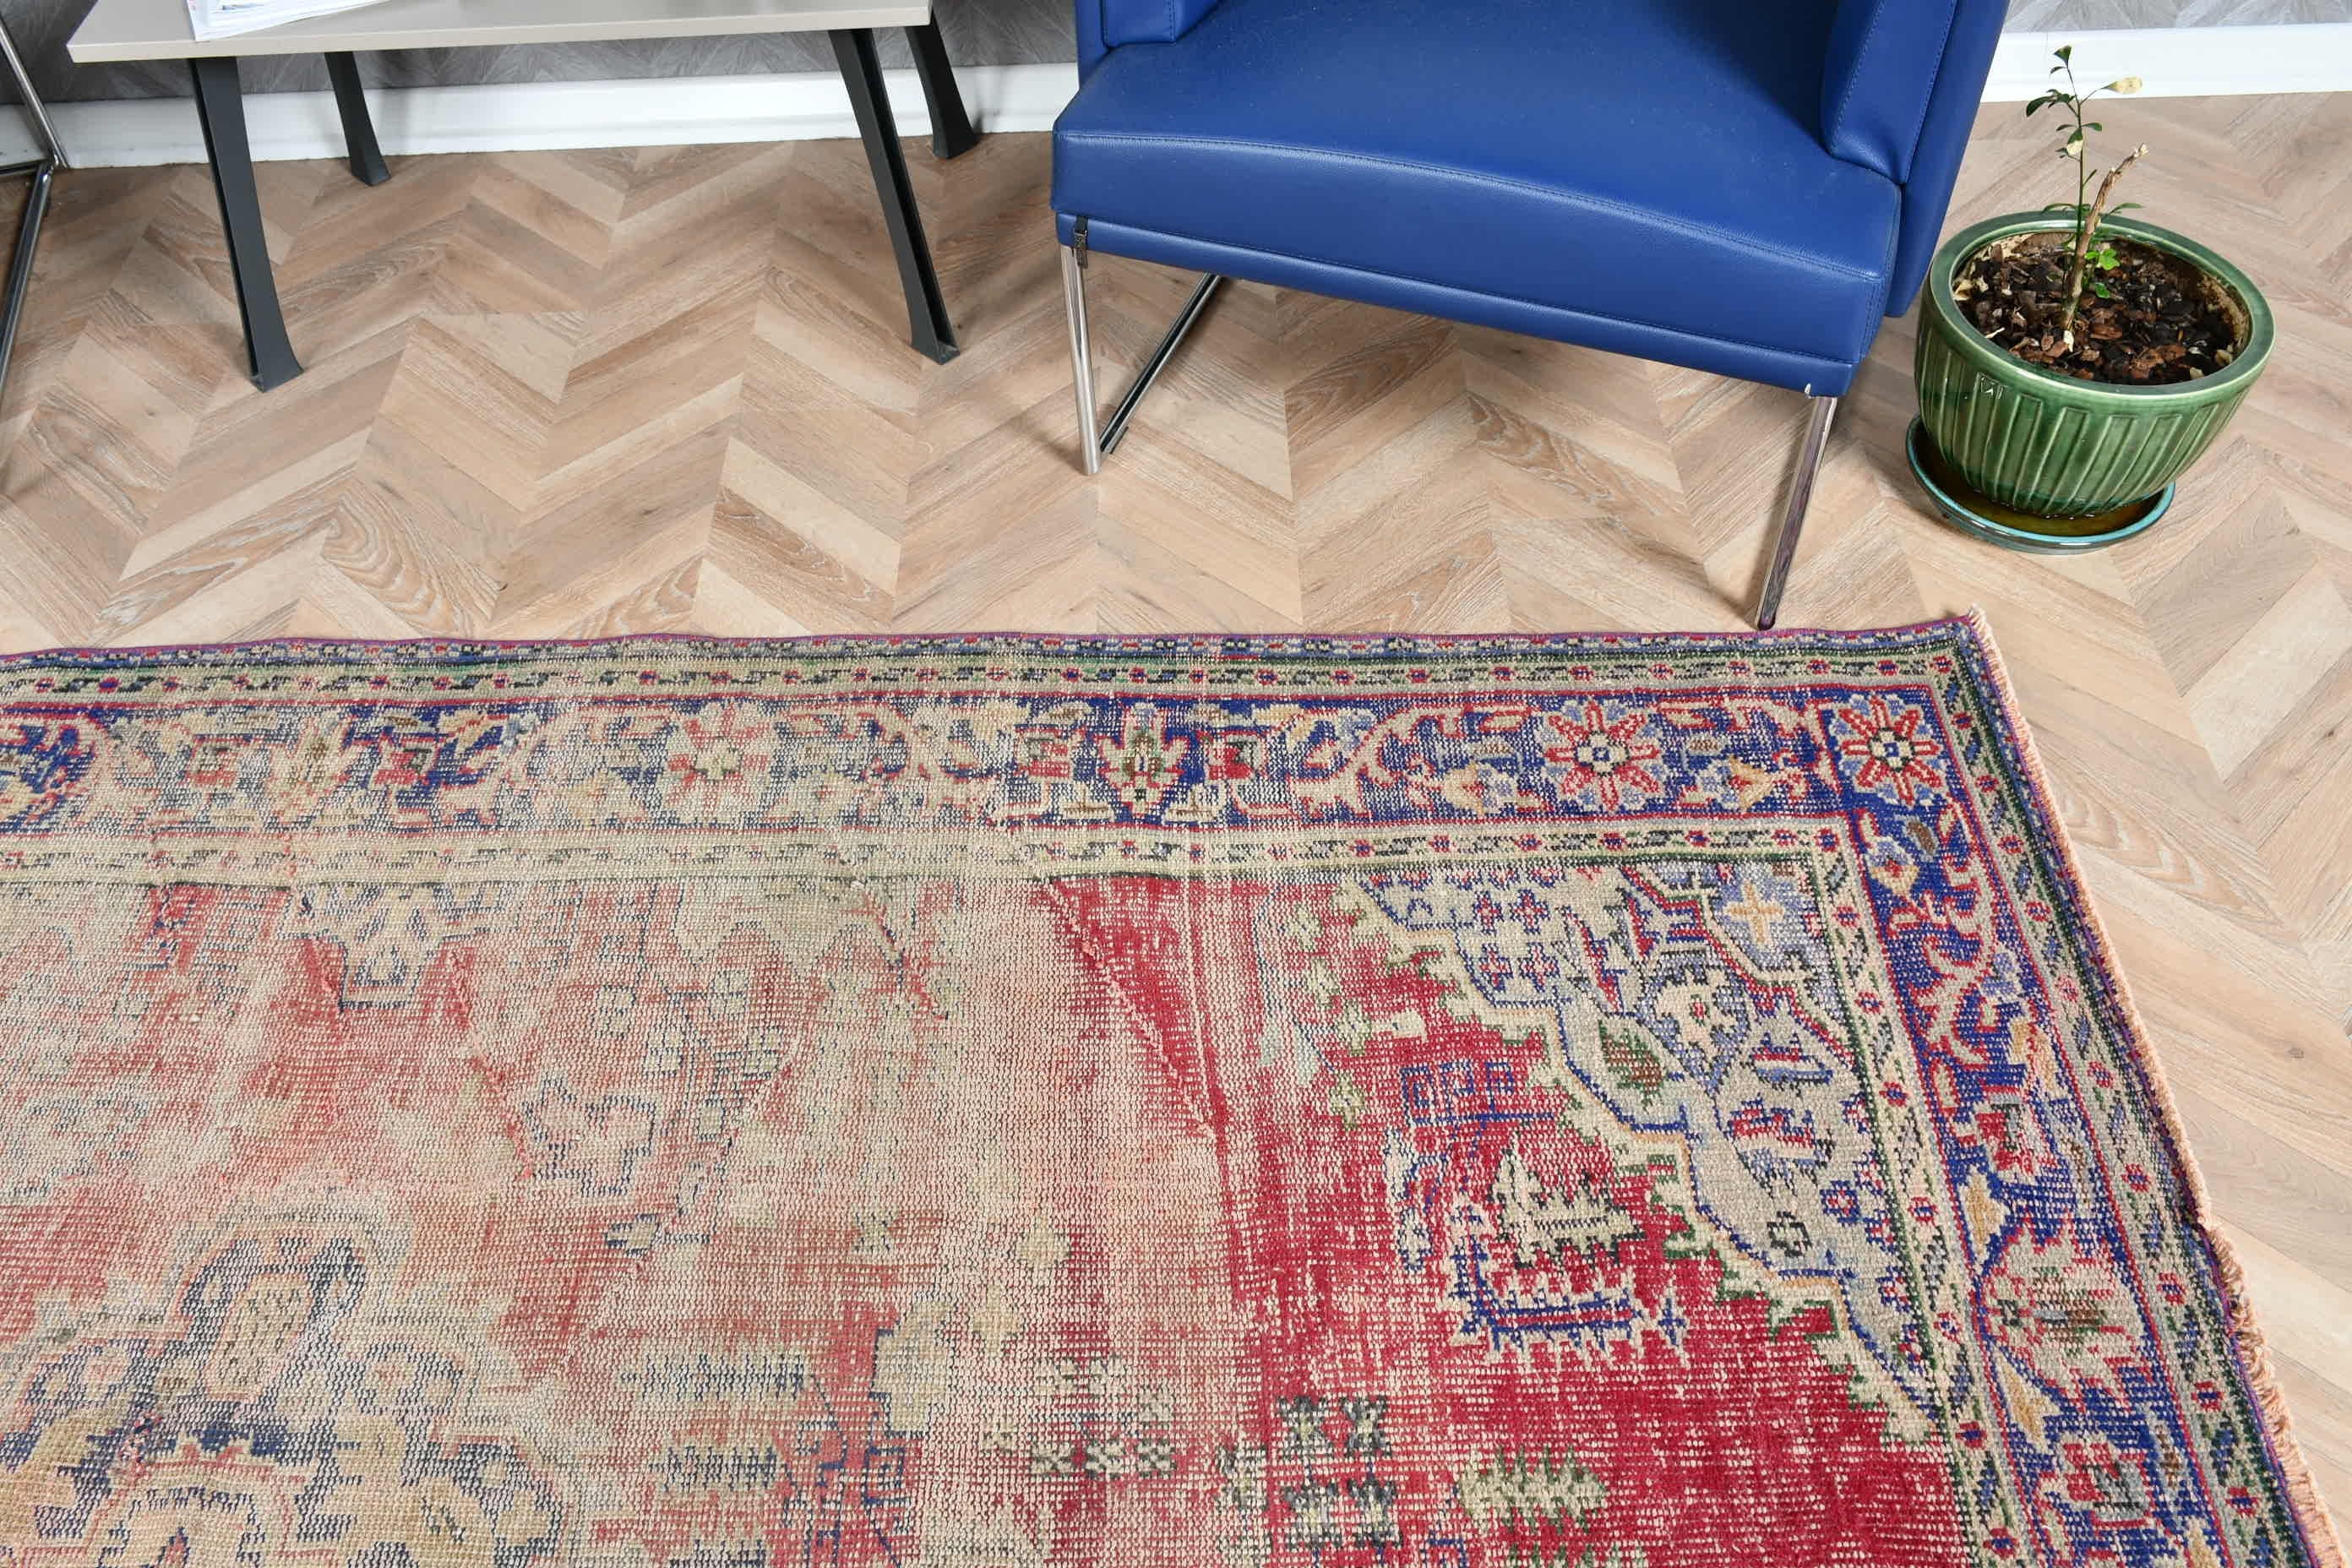 Vintage Rug, Bedroom Rug, Living Room Rug, Turkish Rug, Home Decor Rug, Rugs for Living Room, Red Anatolian Rugs, 6.3x8.8 ft Large Rug